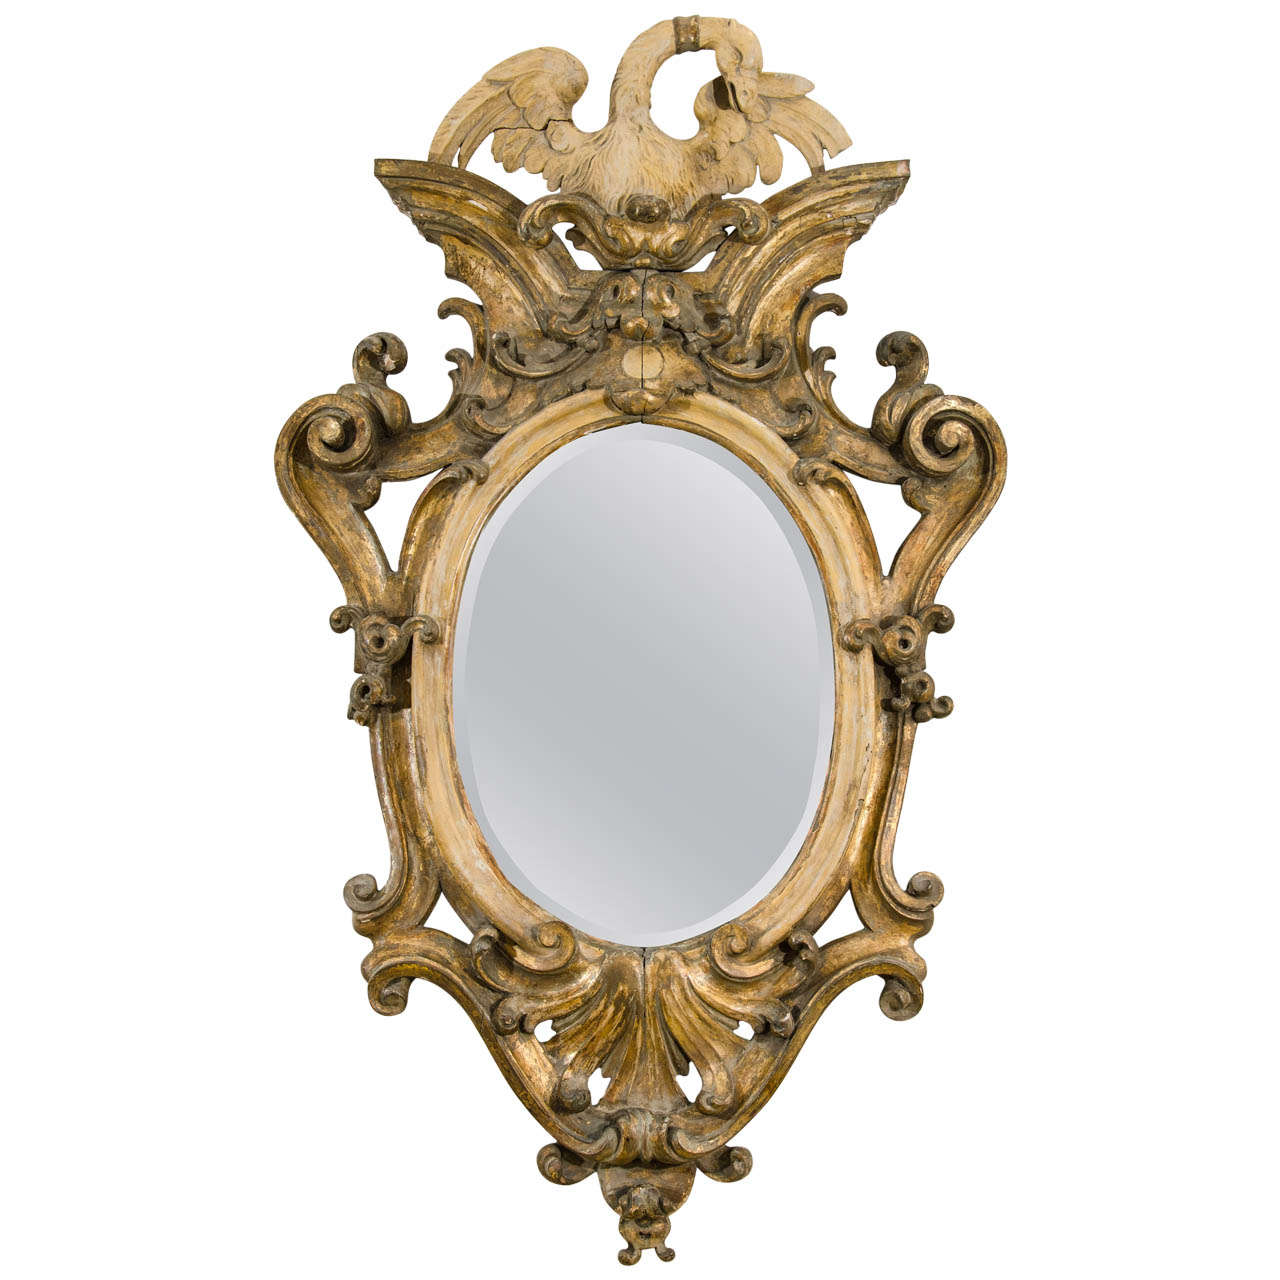 A 19th Century Italian Baroque Style Giltwood Mirror